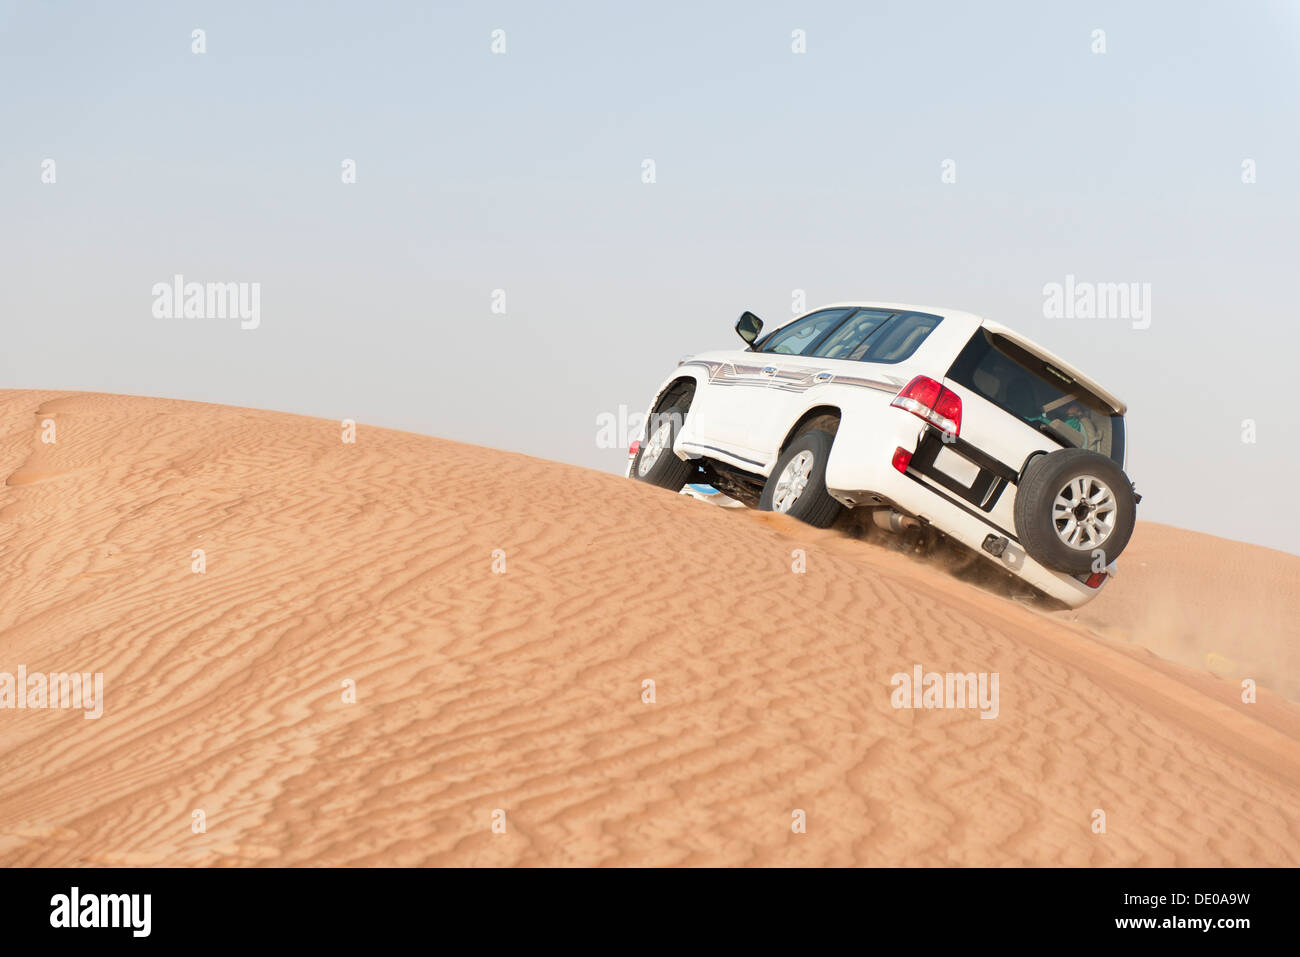 Sports utility vehicle driving up desert sand dune Stock Photo